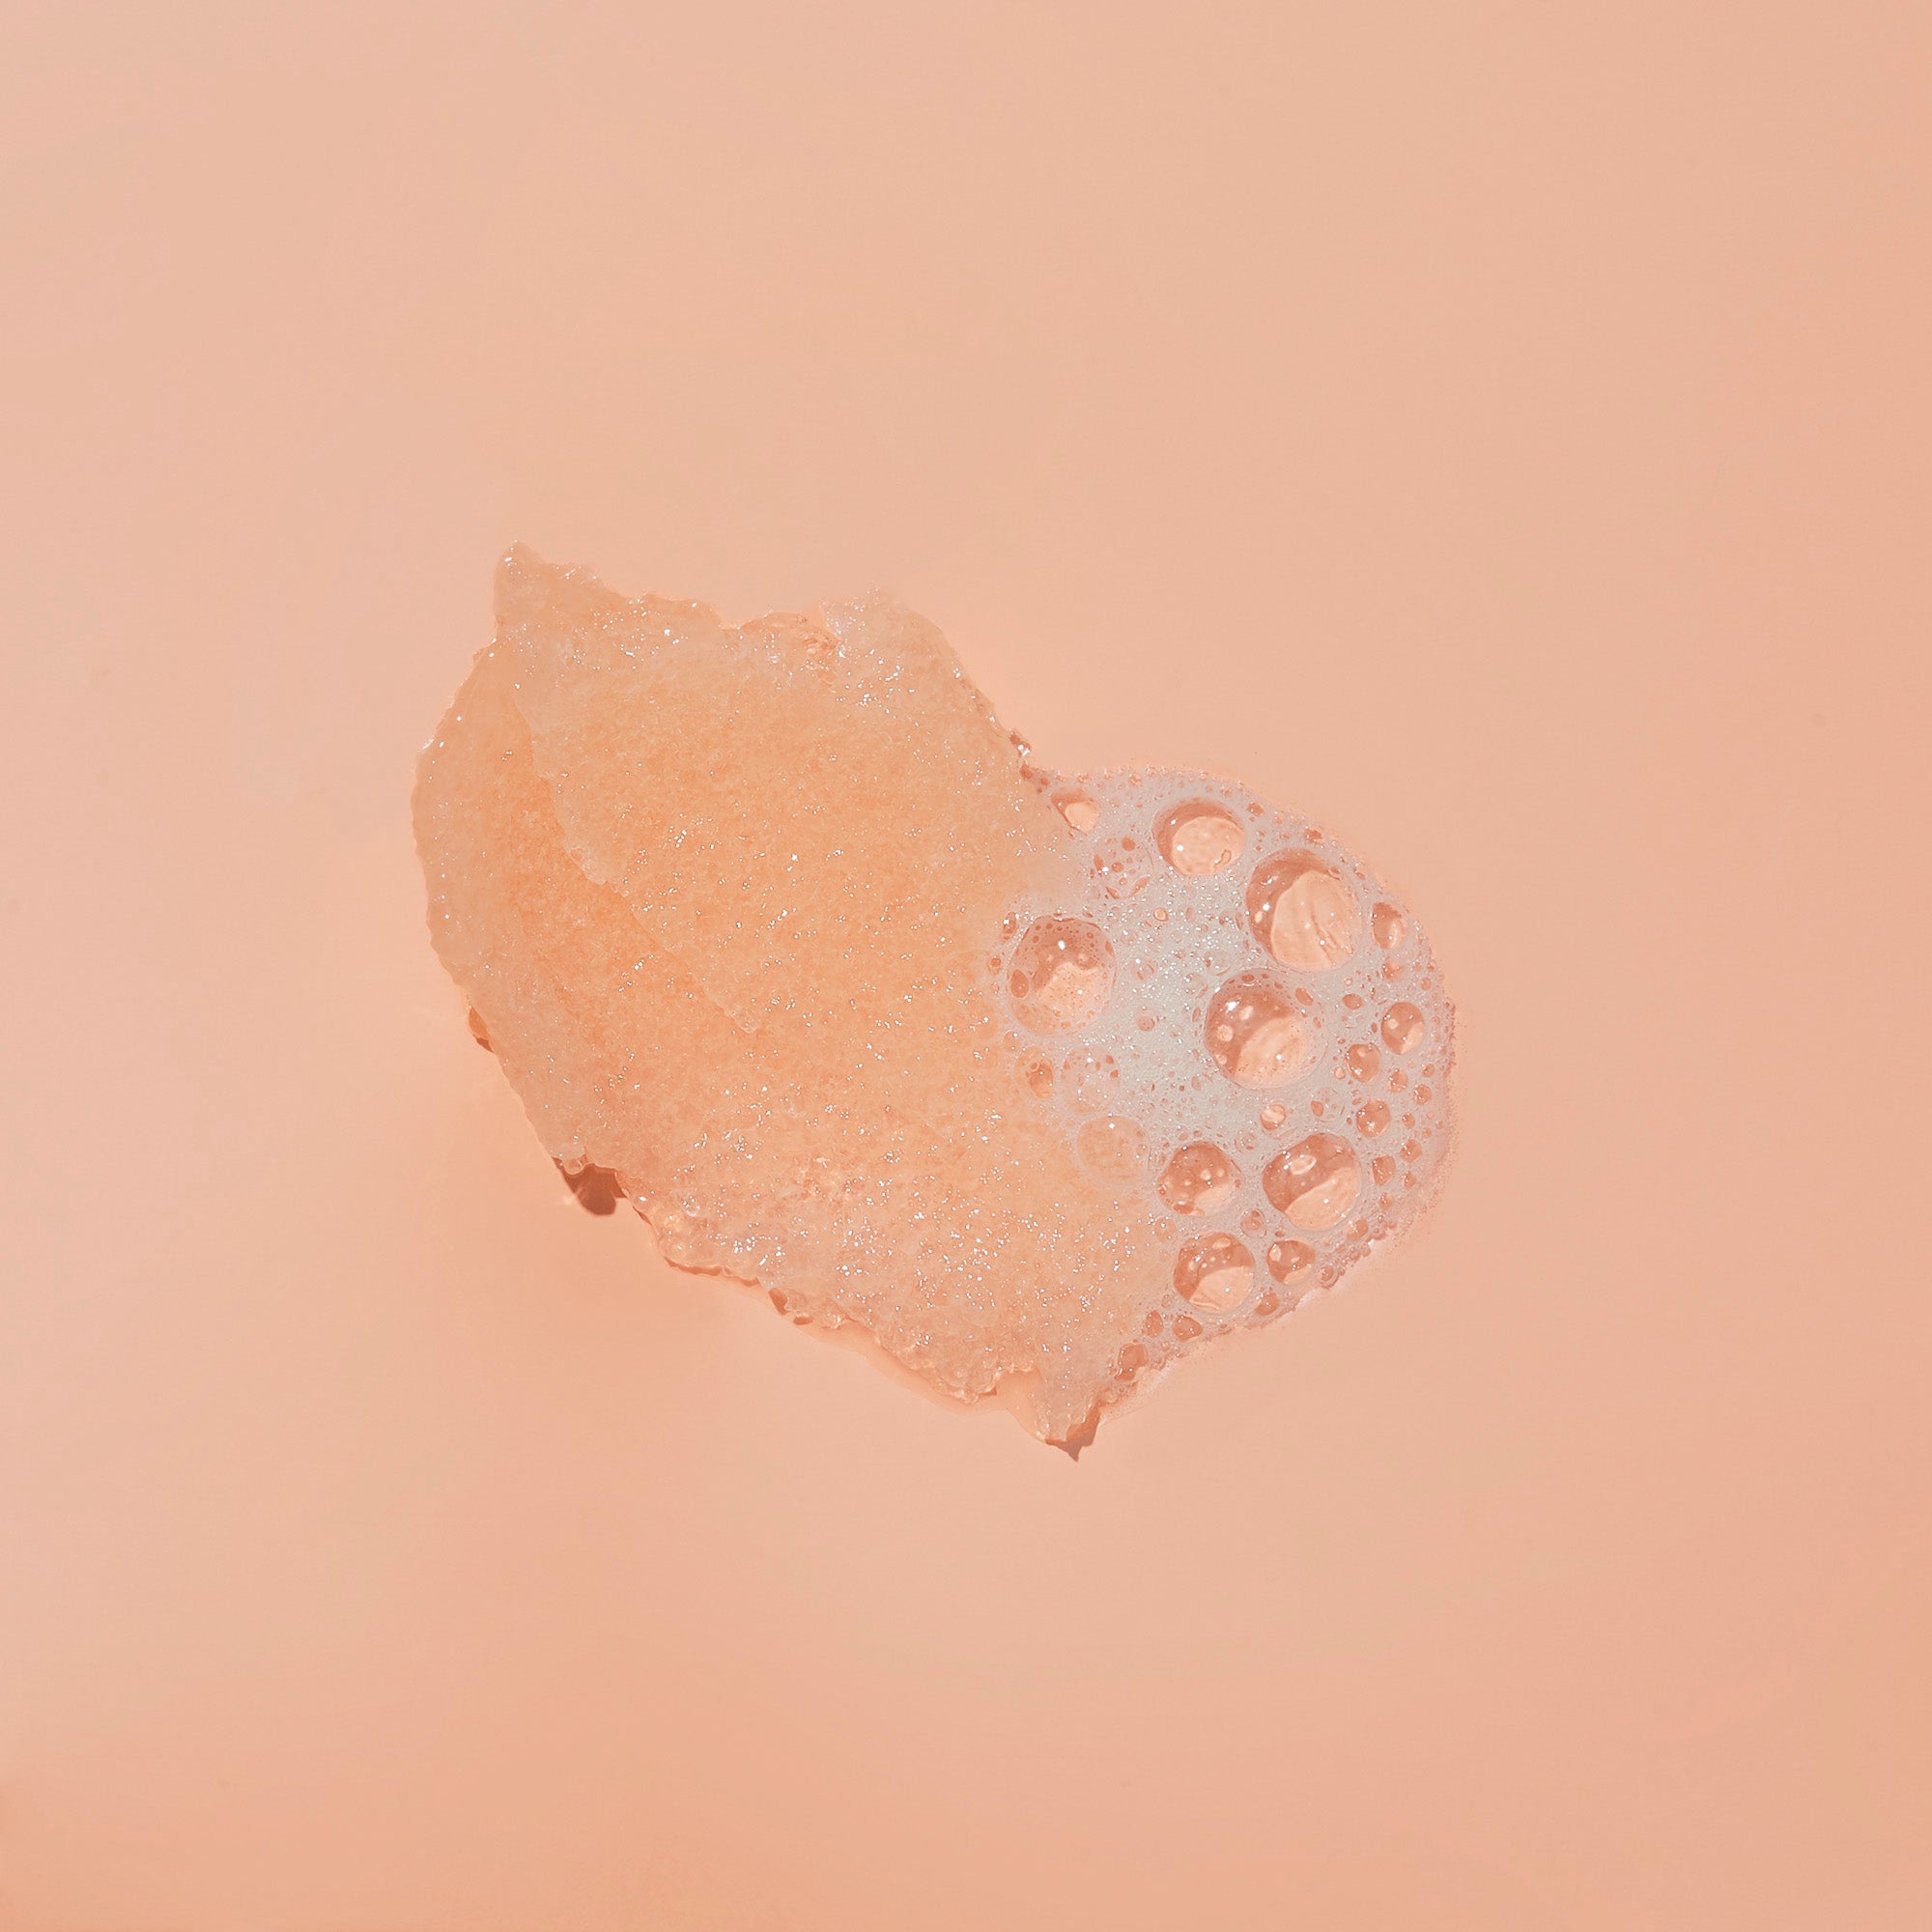 Sugar scrub texture with bubble on orange background